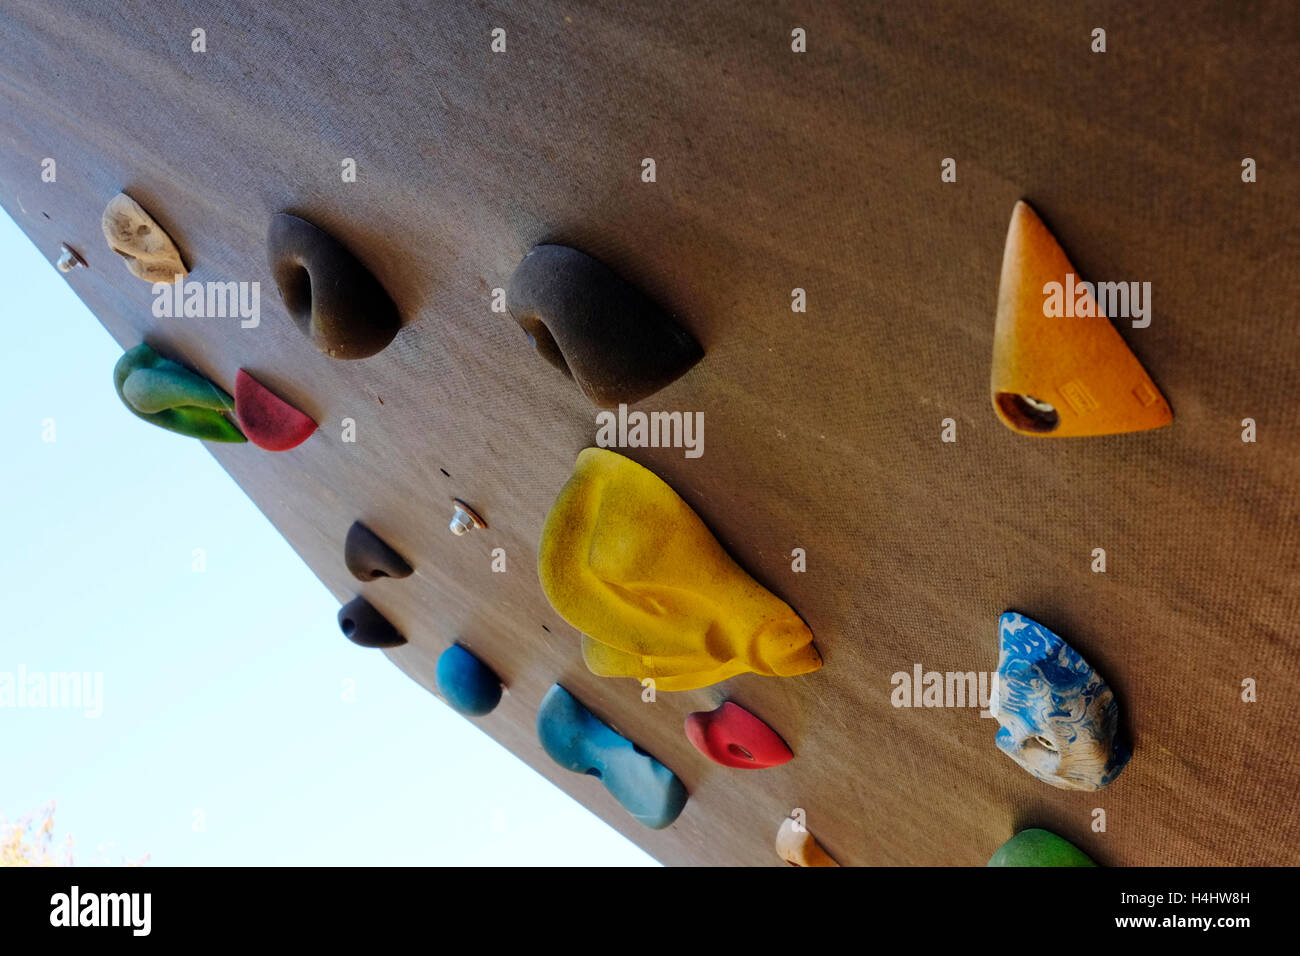 Climbing holds on a freeclimbing wall Stock Photo